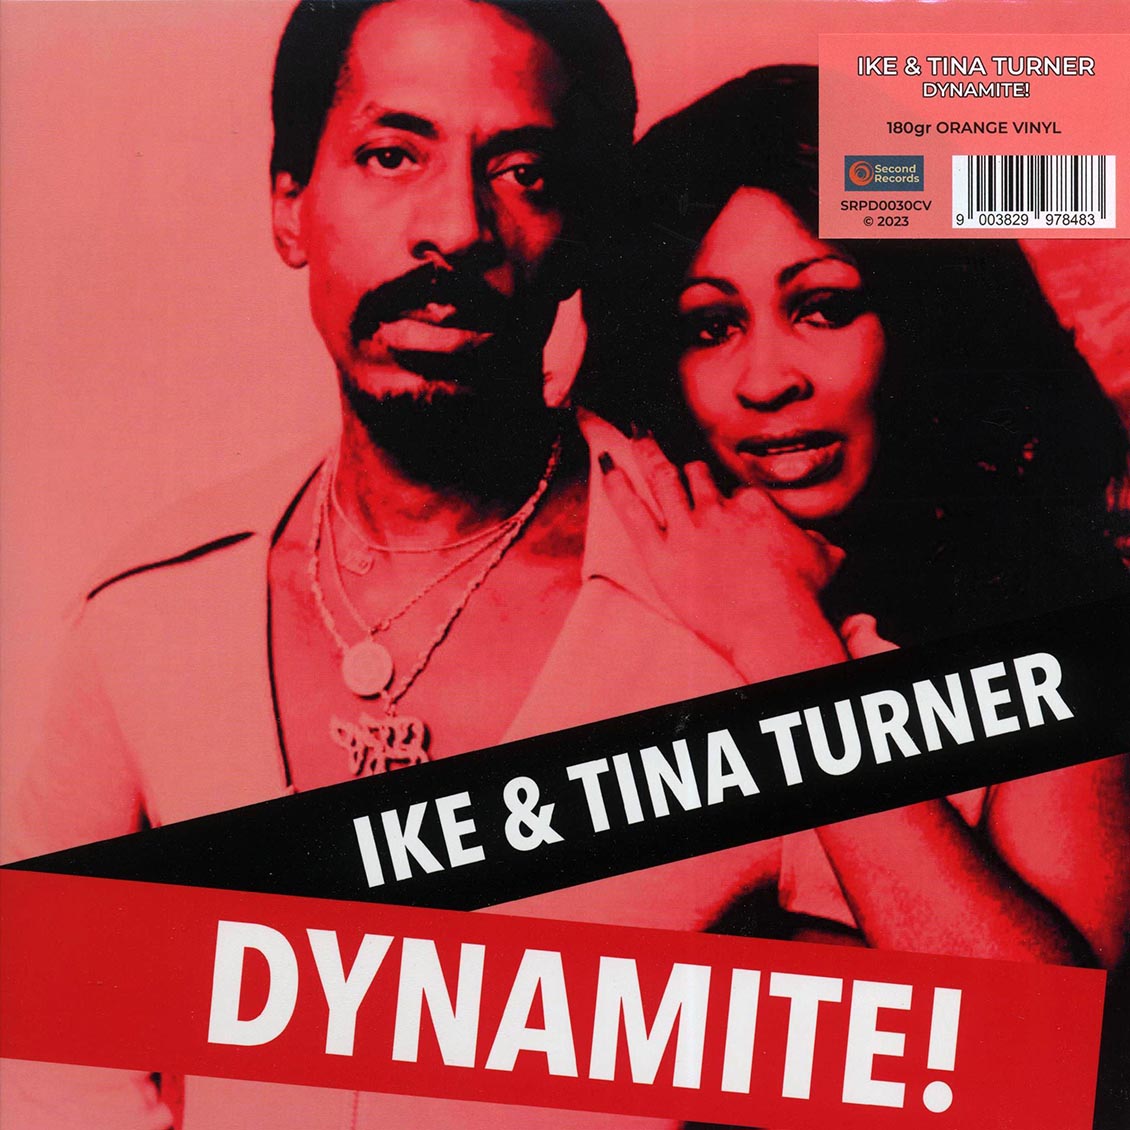 Ike & Tina Turner - Dynamite! (180g) (orange vinyl) - Vinyl LP